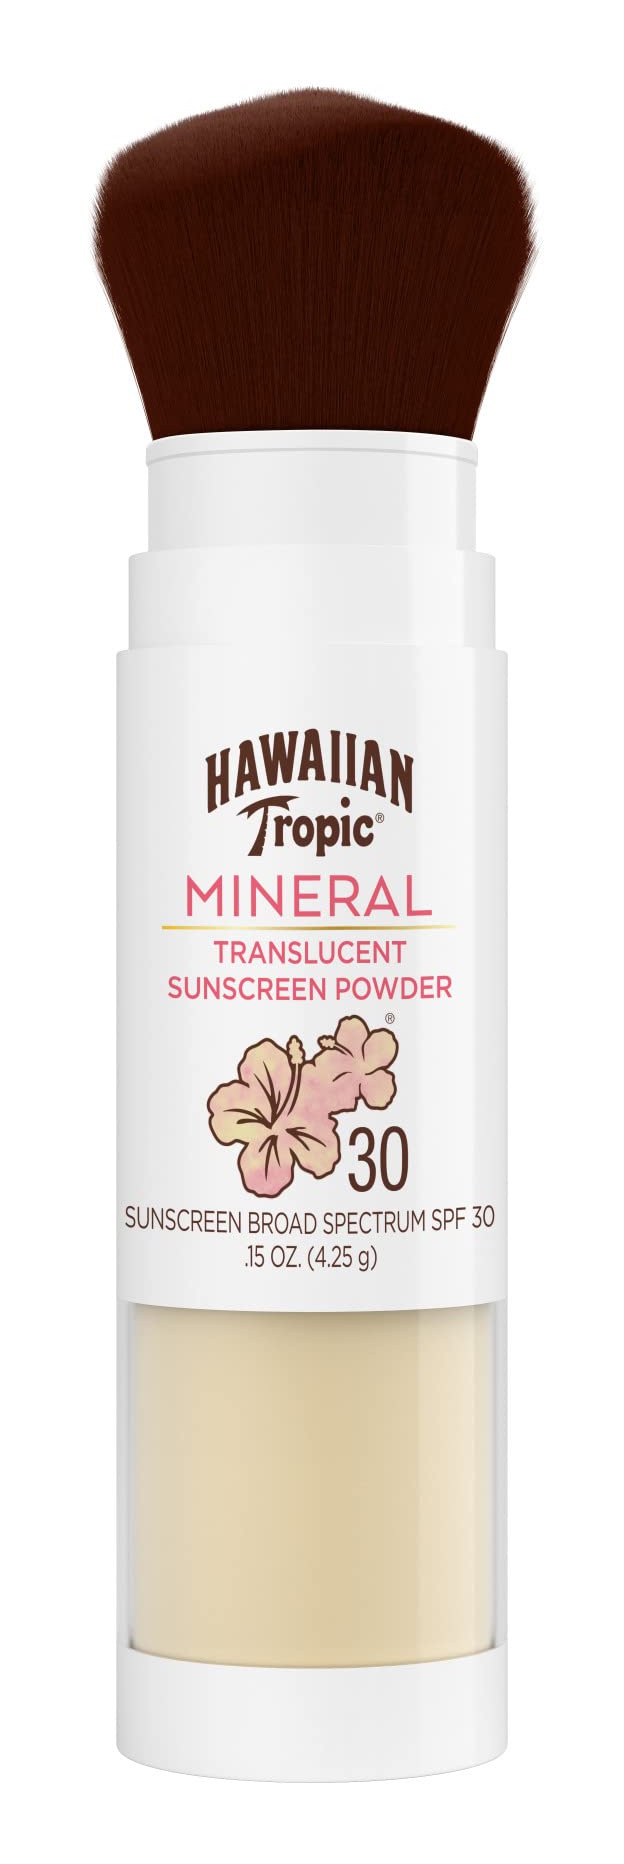 Hawaiian Tropic Mineral Translucent Sun Powder SPF 30